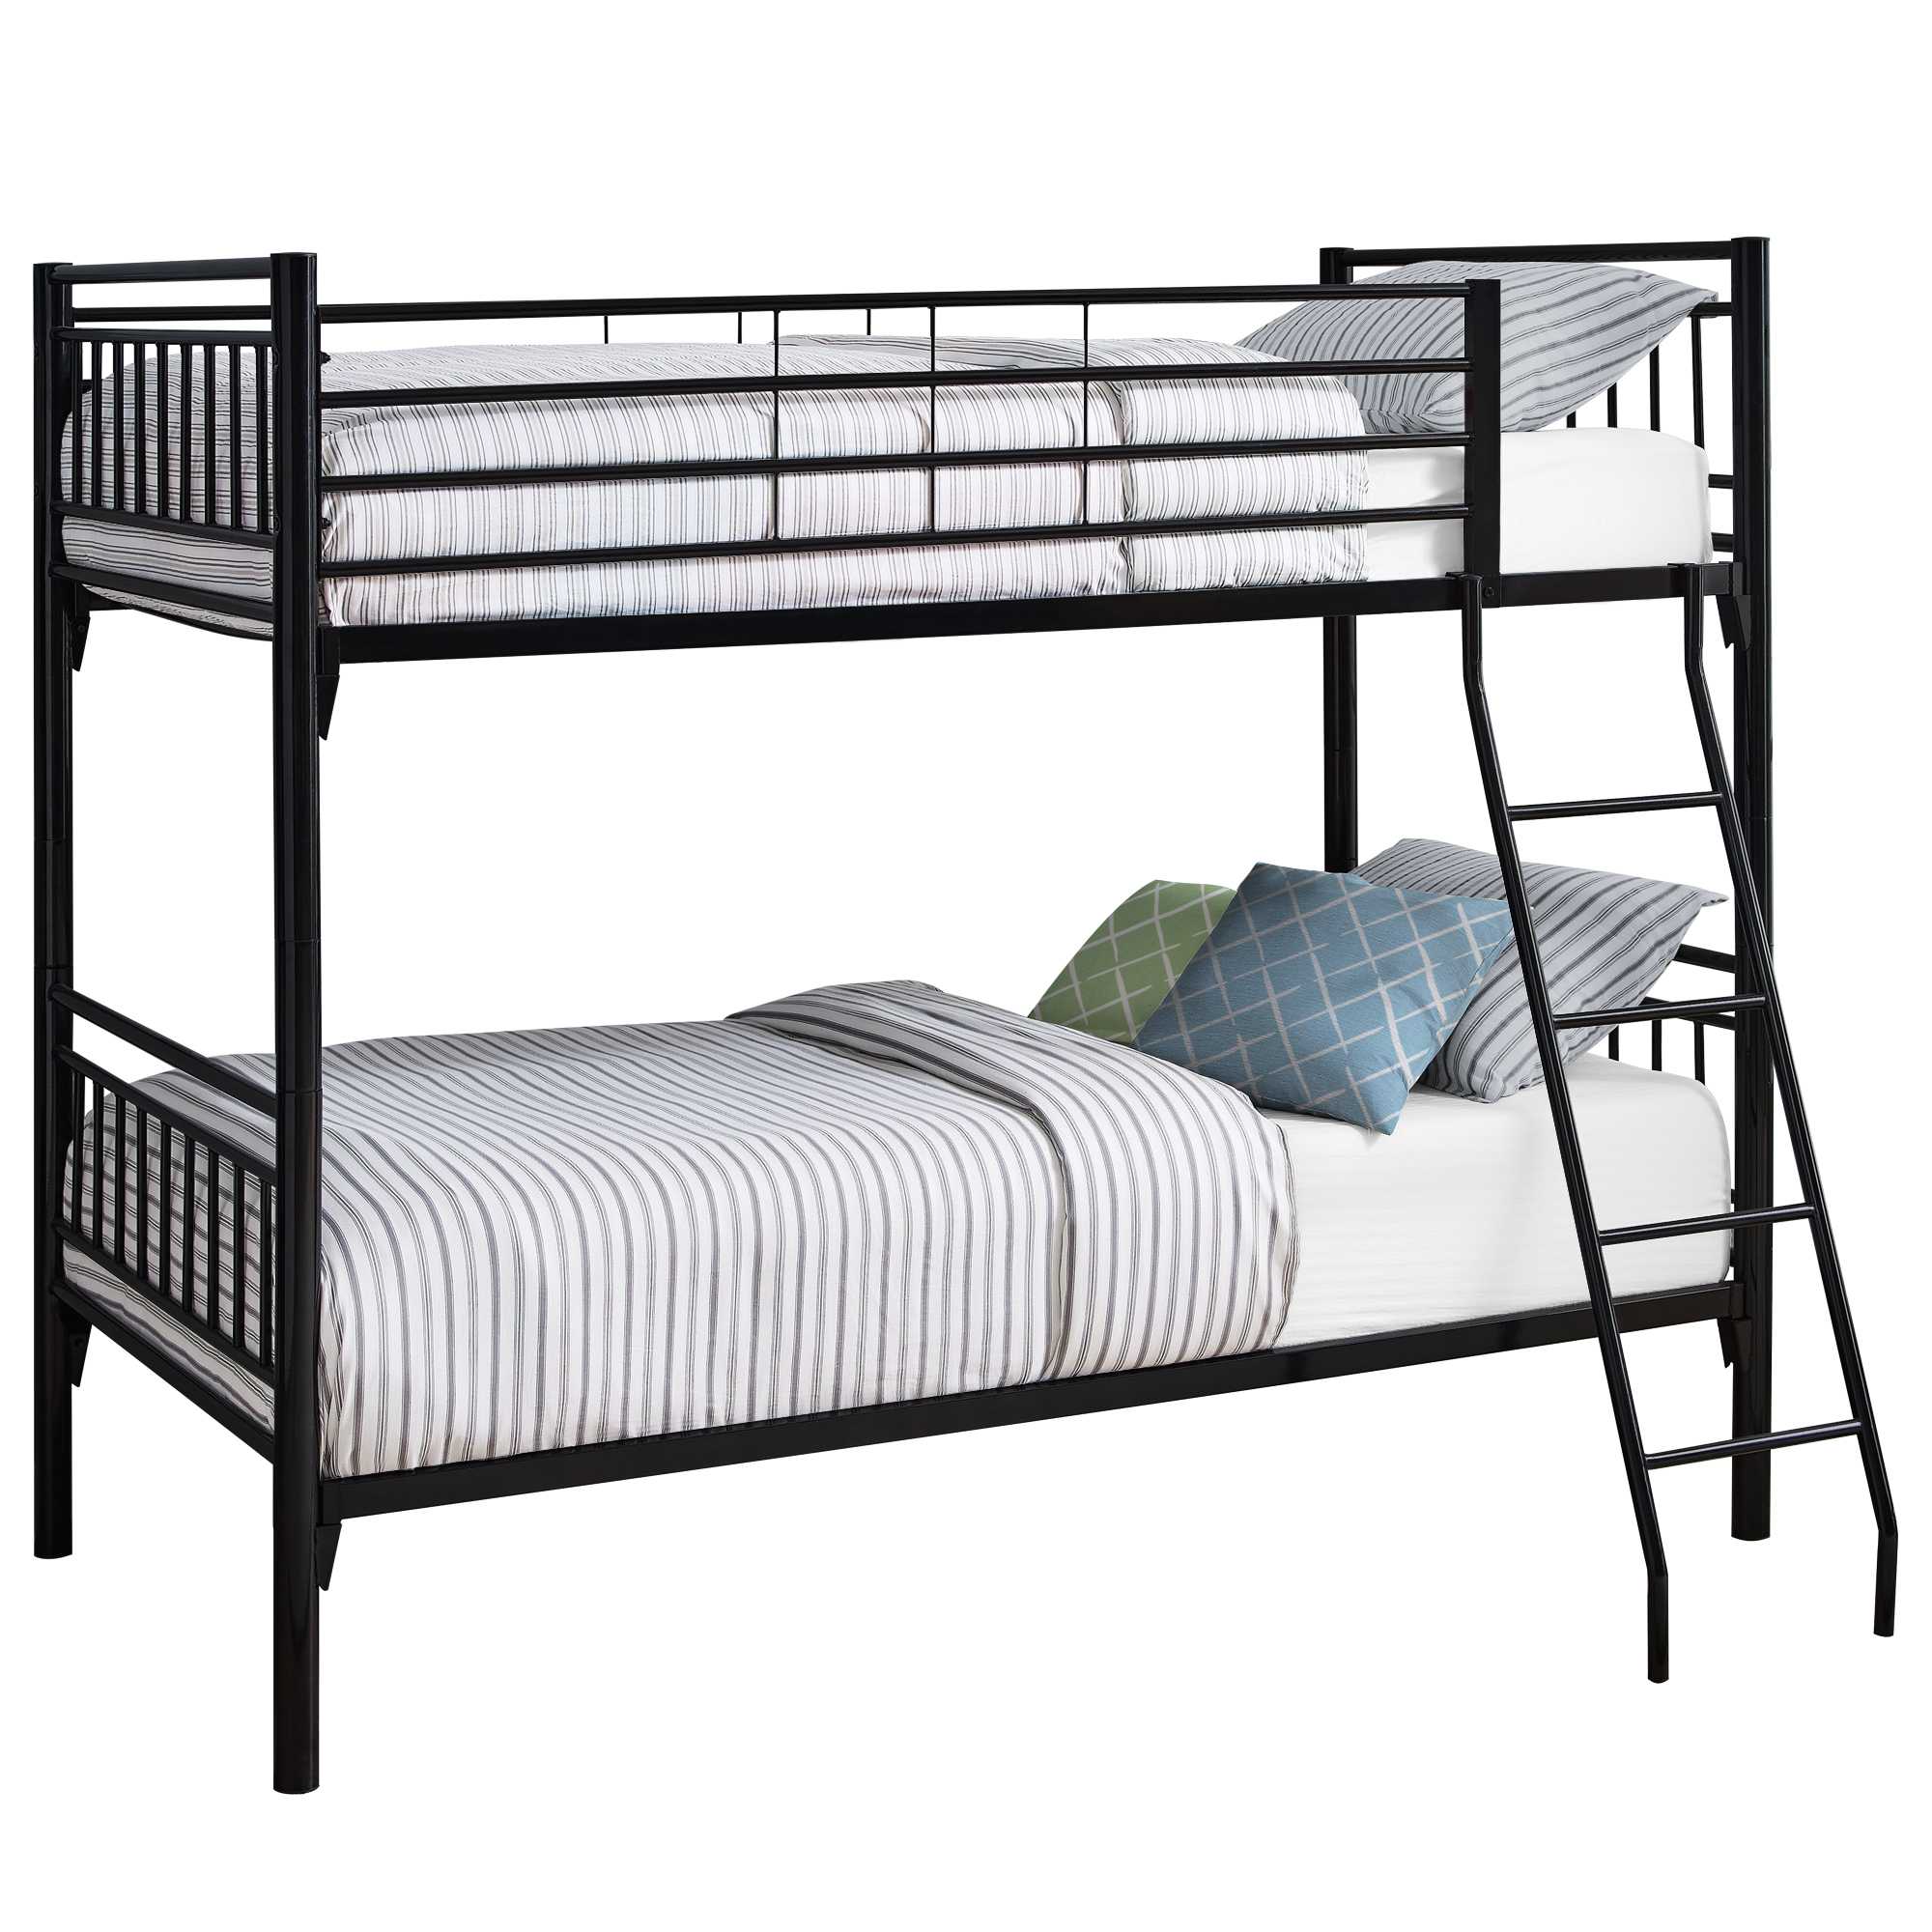 56.75" x 78.5" x 65.75" Black Metal Detachable Bunk Bed Twin Size